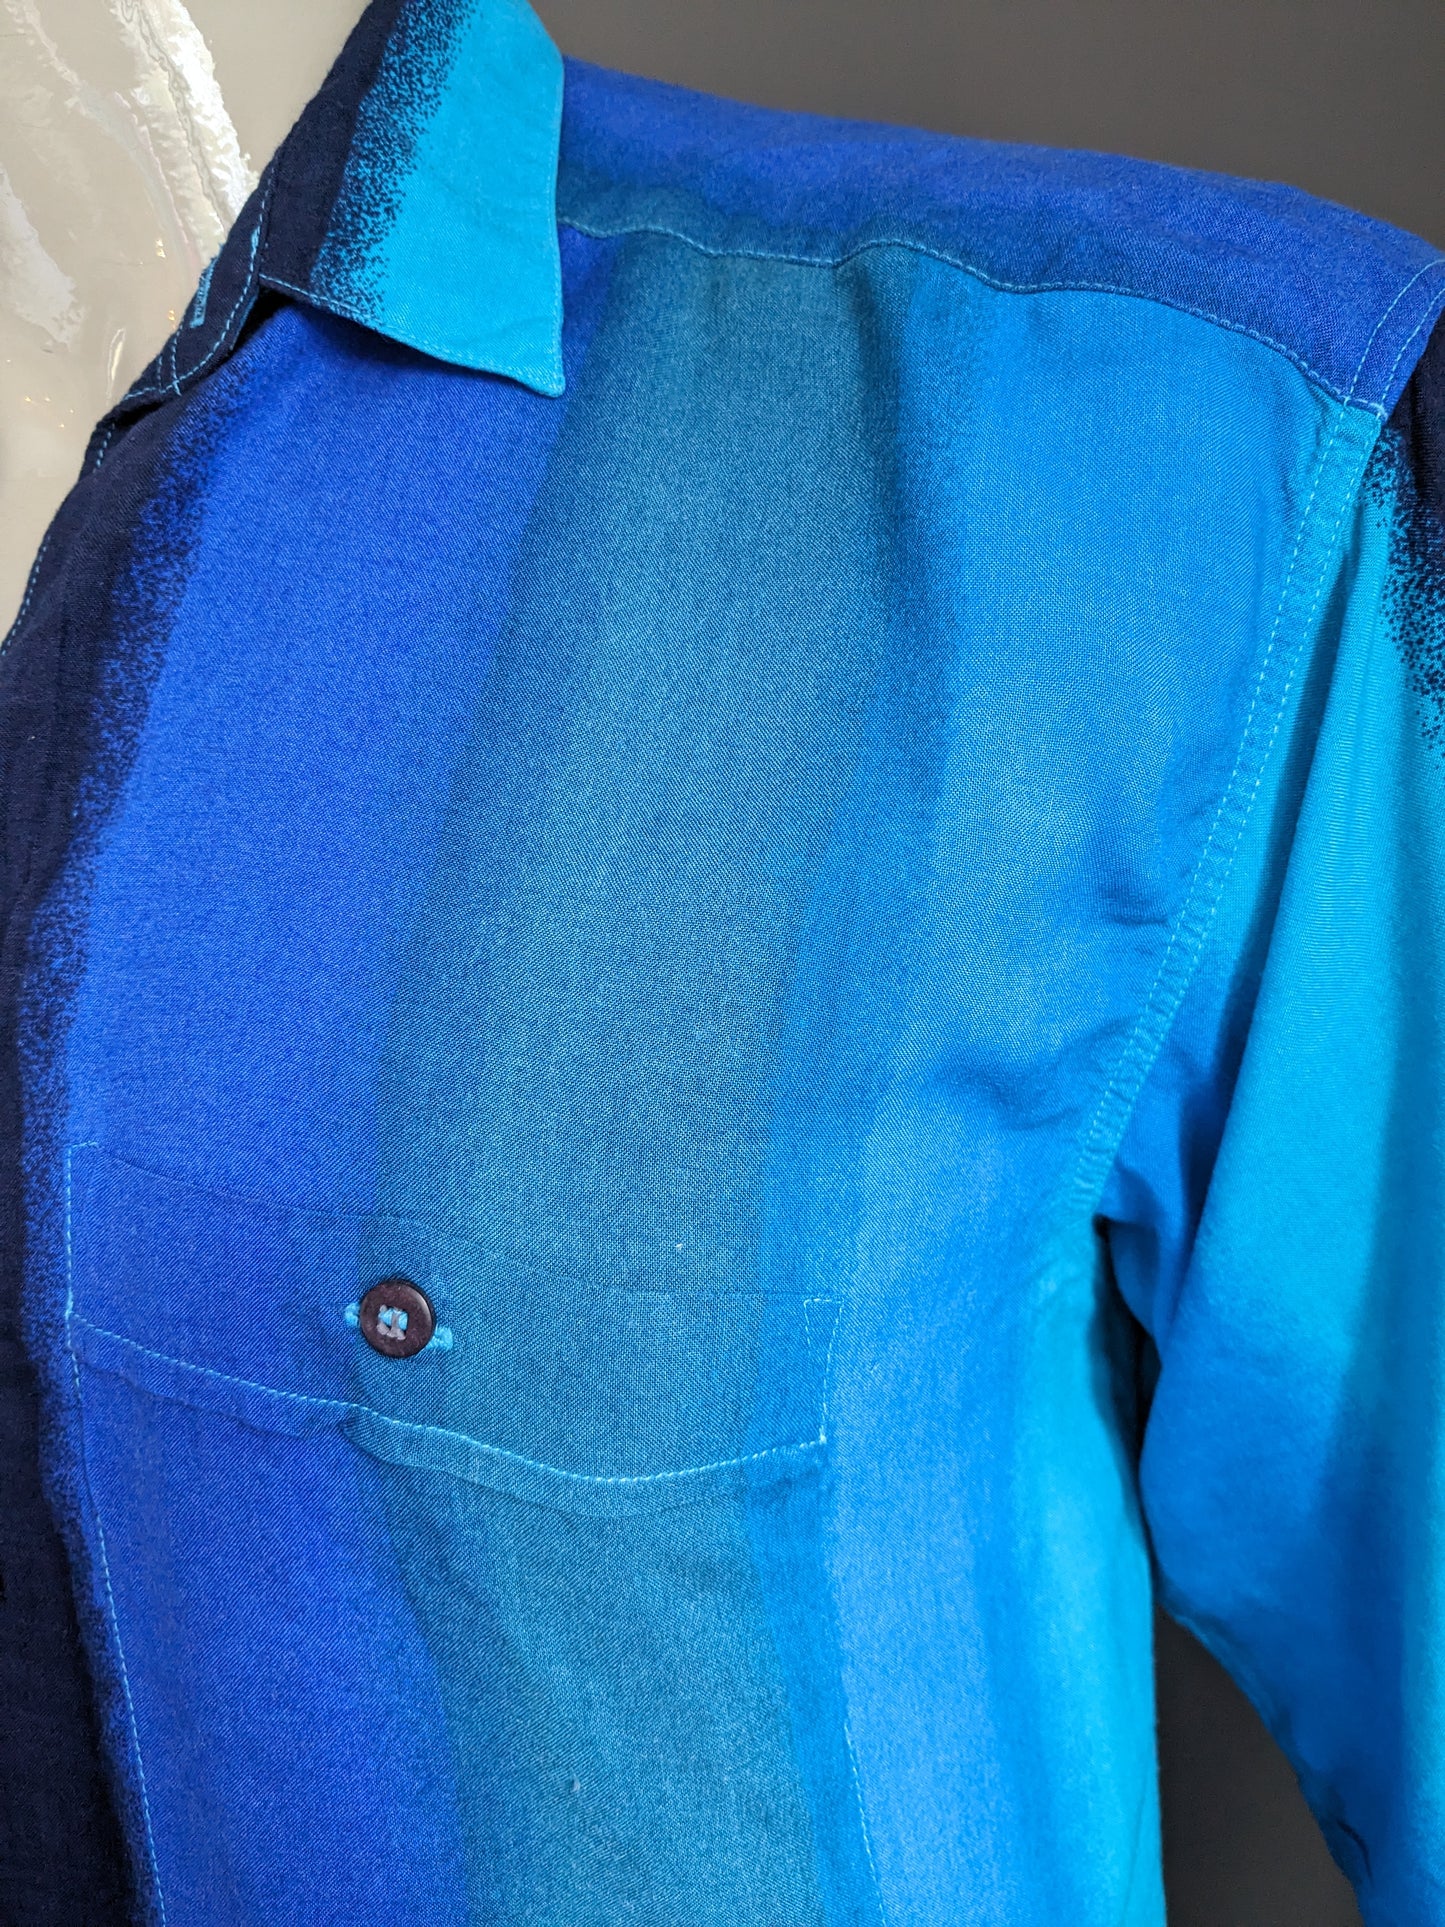 Vintage 80's-90's Business Style overhemd korte mouw. Blauwe print. Maat L.